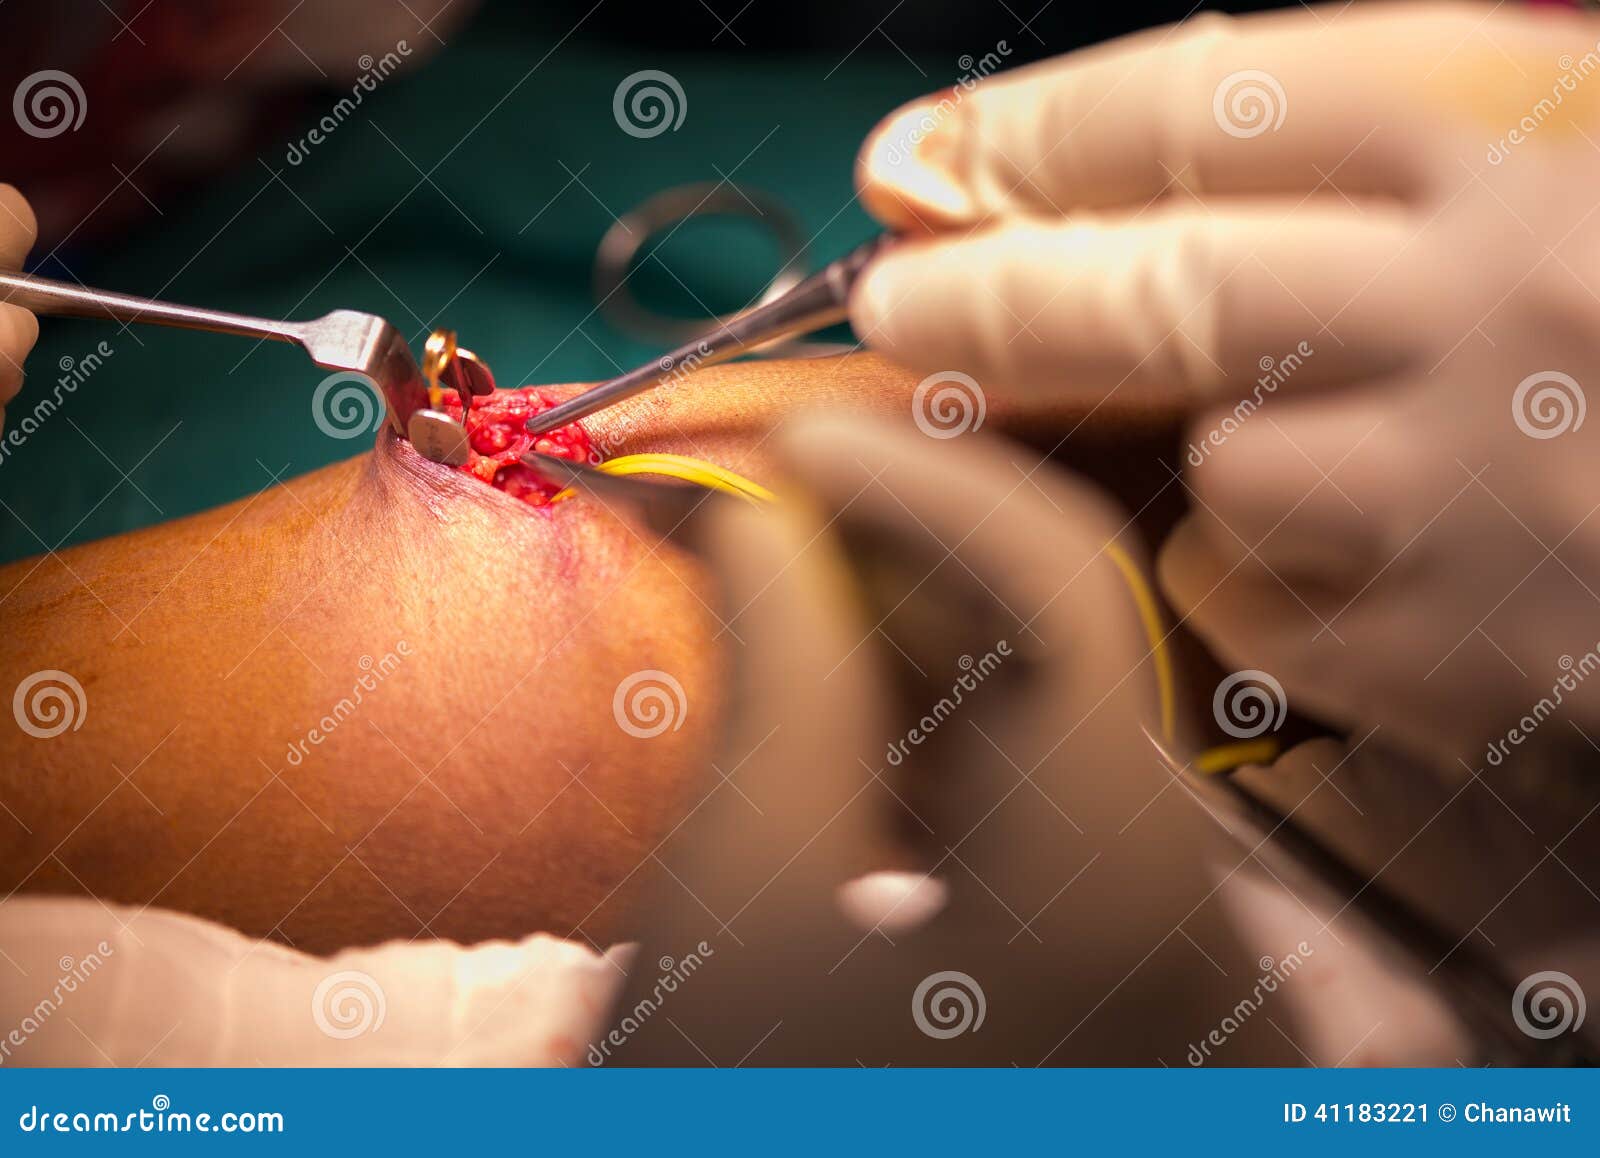 arteriovenous fistula